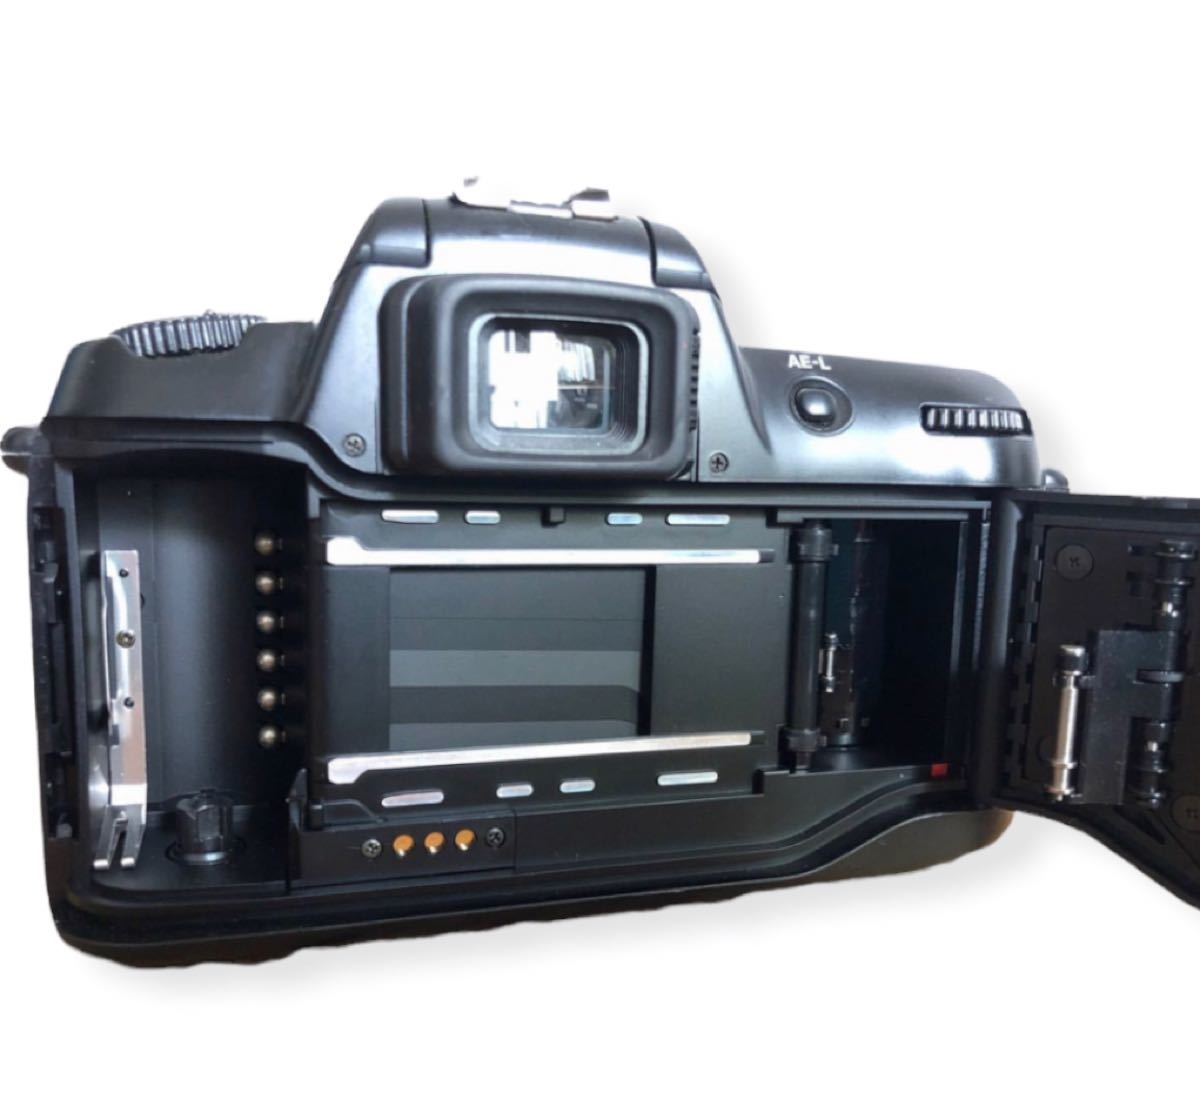 Nikon F60 フィルム一眼レフカメラ